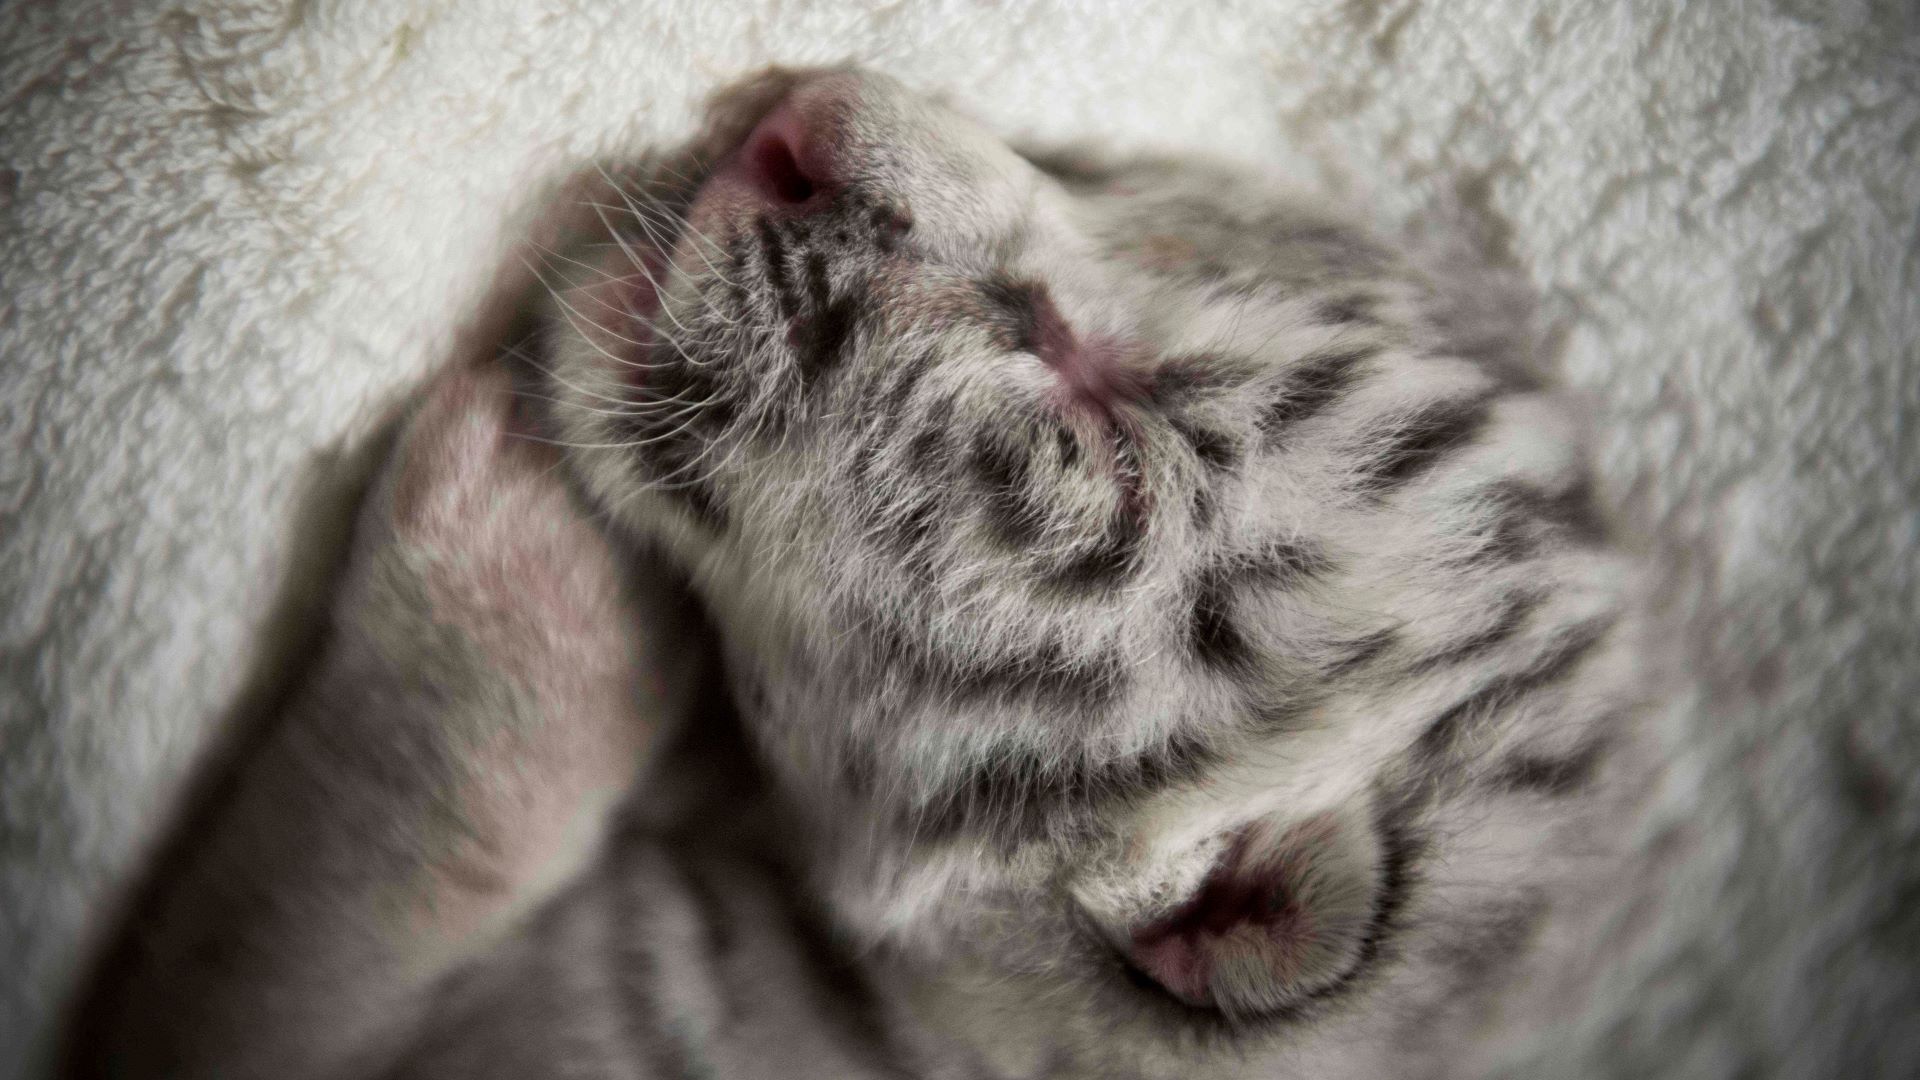 A sleeping white tiger cub